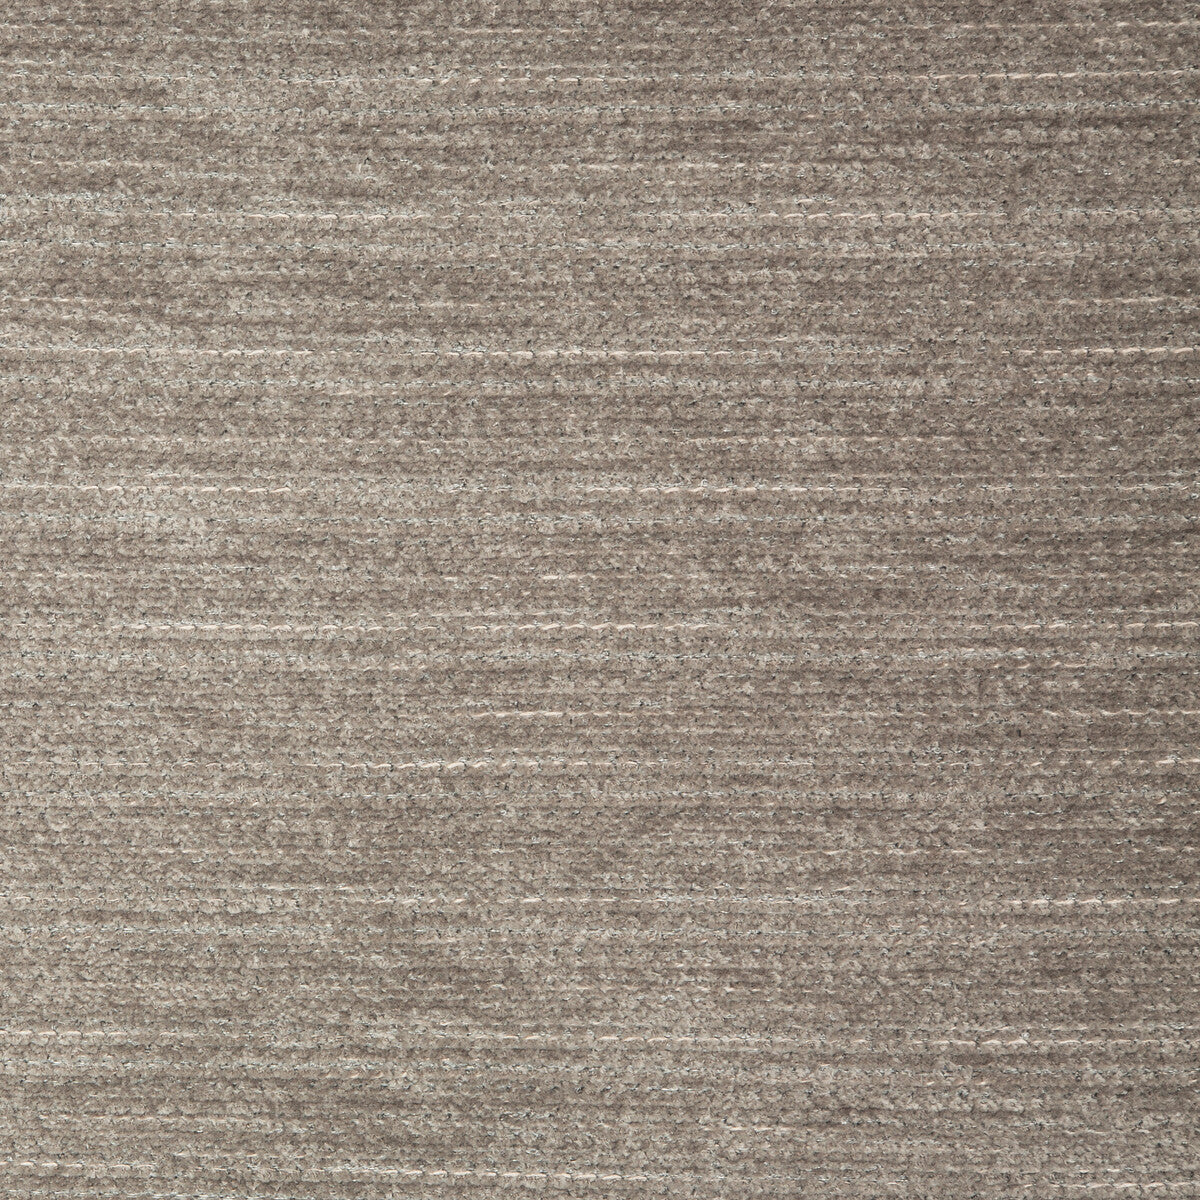 Lj Grw fabric - pattern 2019142.11.0 - by Lee Jofa Modern in the Kw Terra Firma III Indoor Outdoor collection